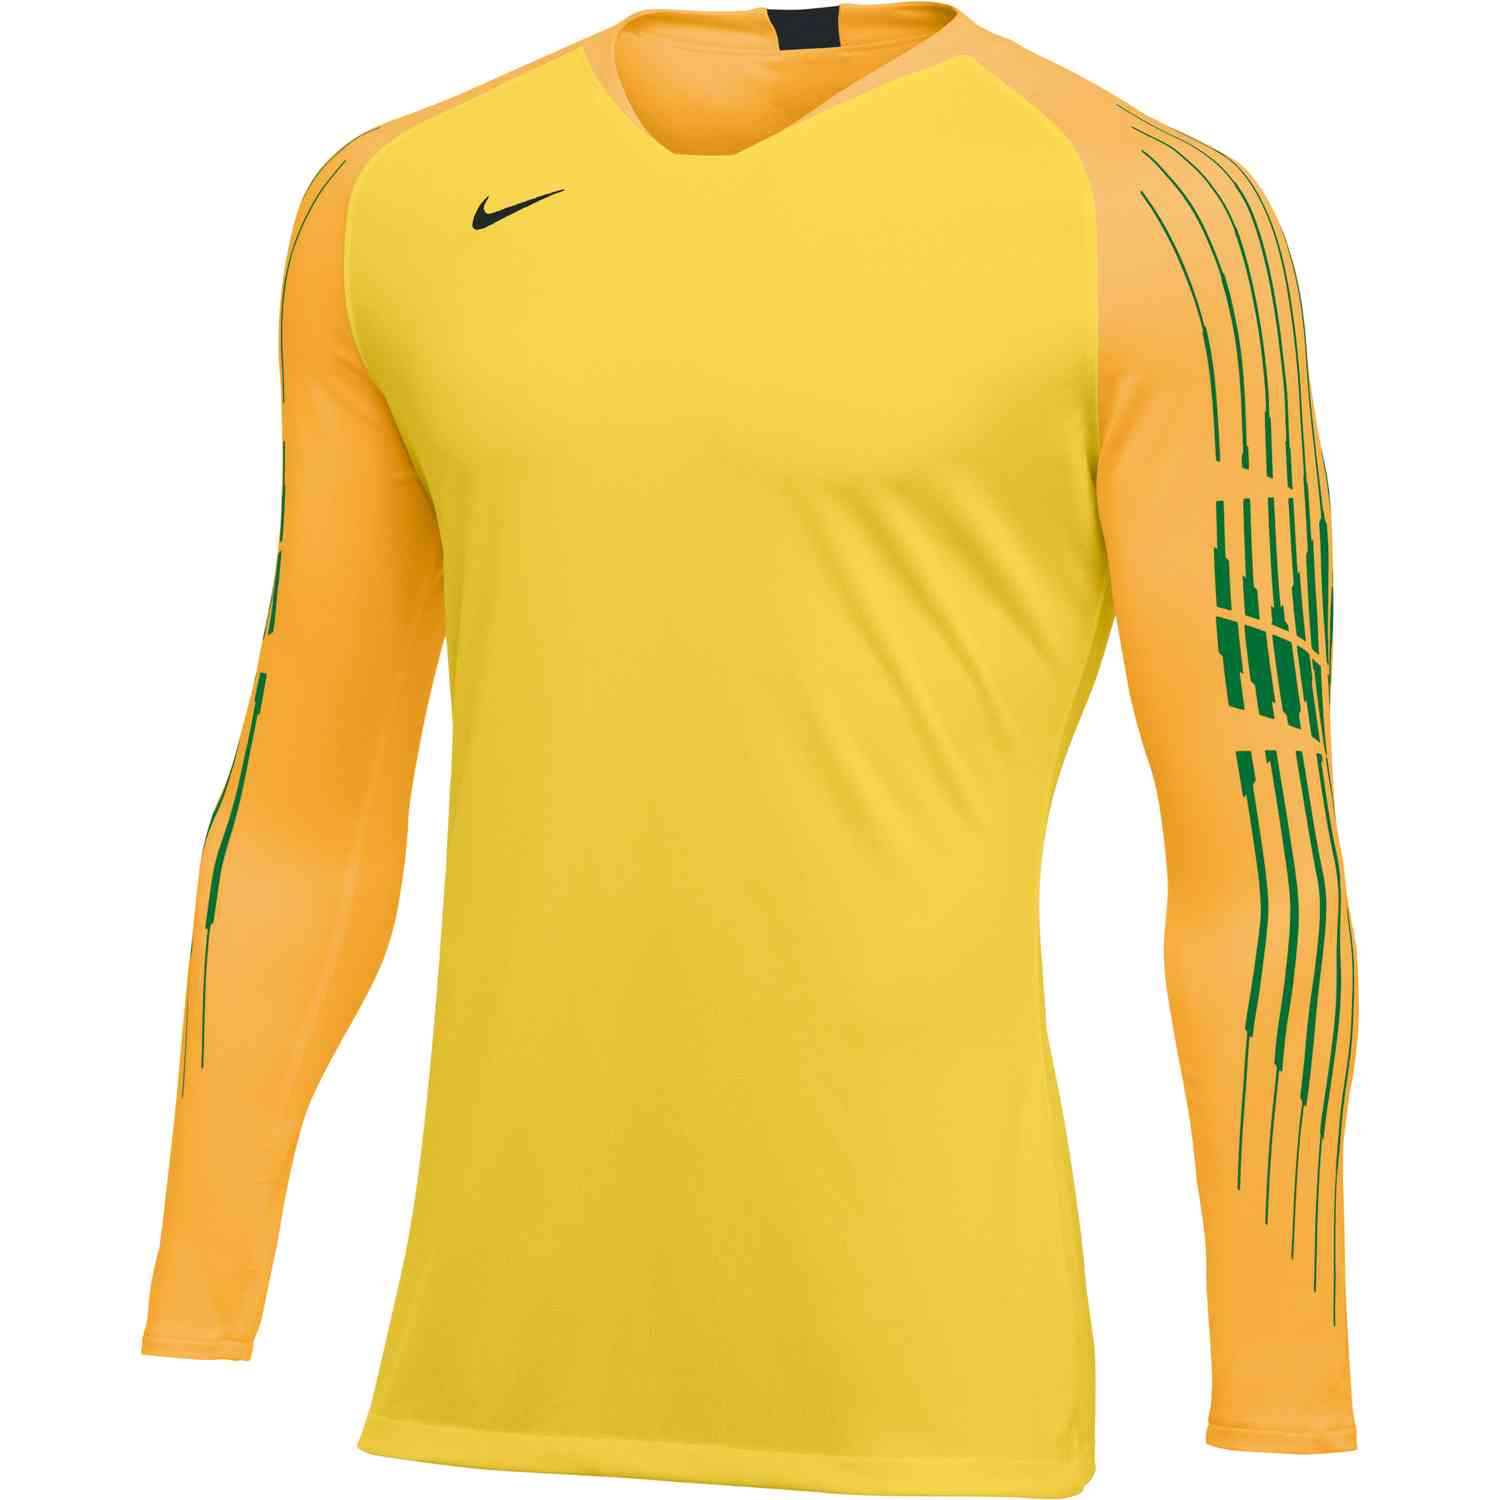 Nike Gardien II Goalkeeper Jersey – Tour Yellow